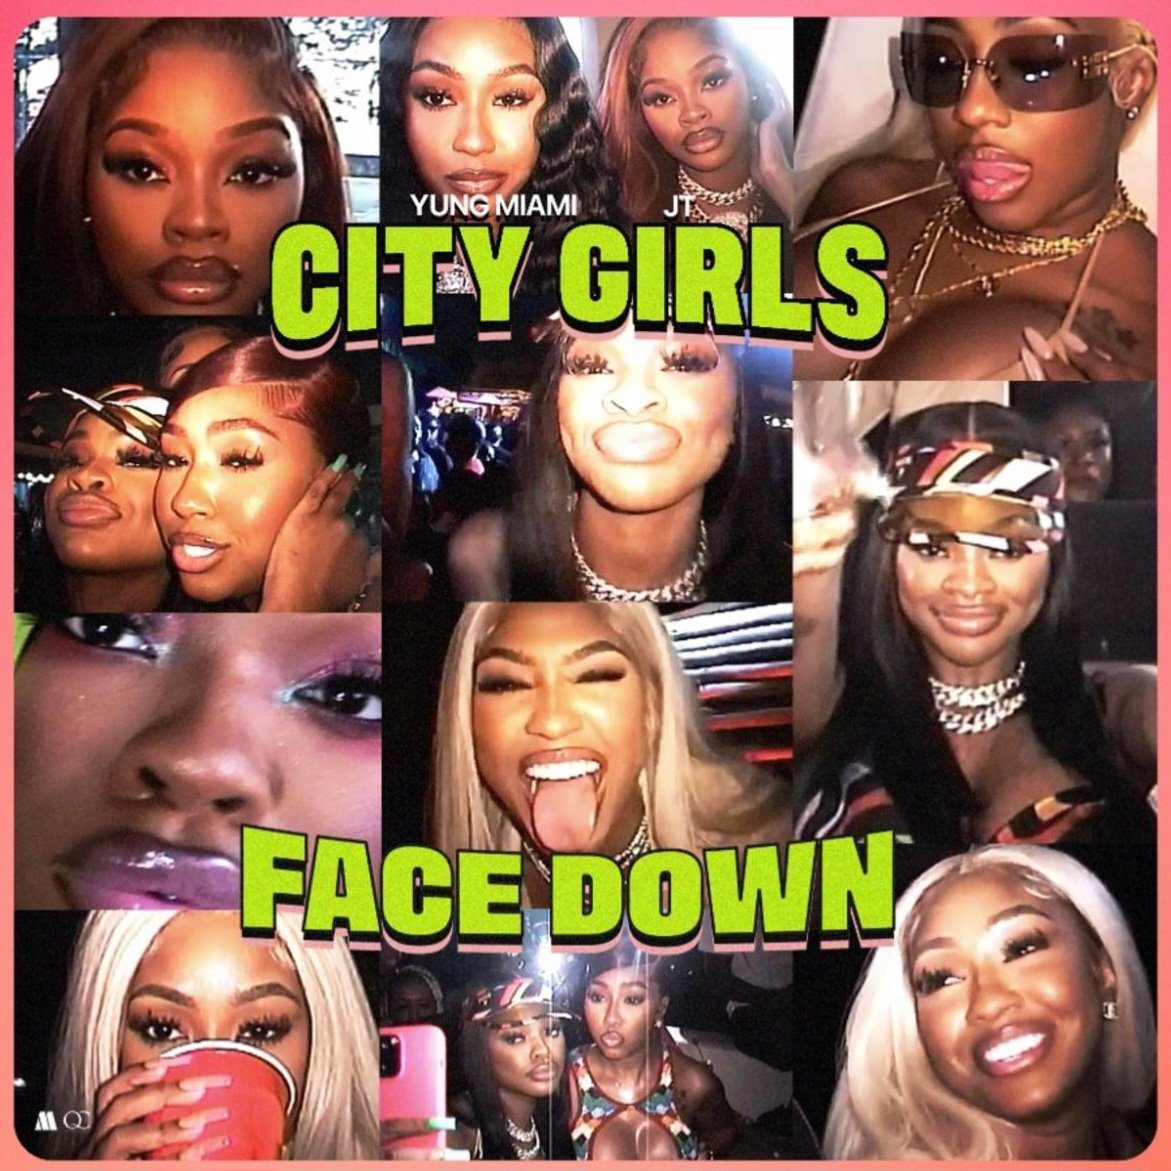 City Girls release Face Down via 360 MAGAZINE.